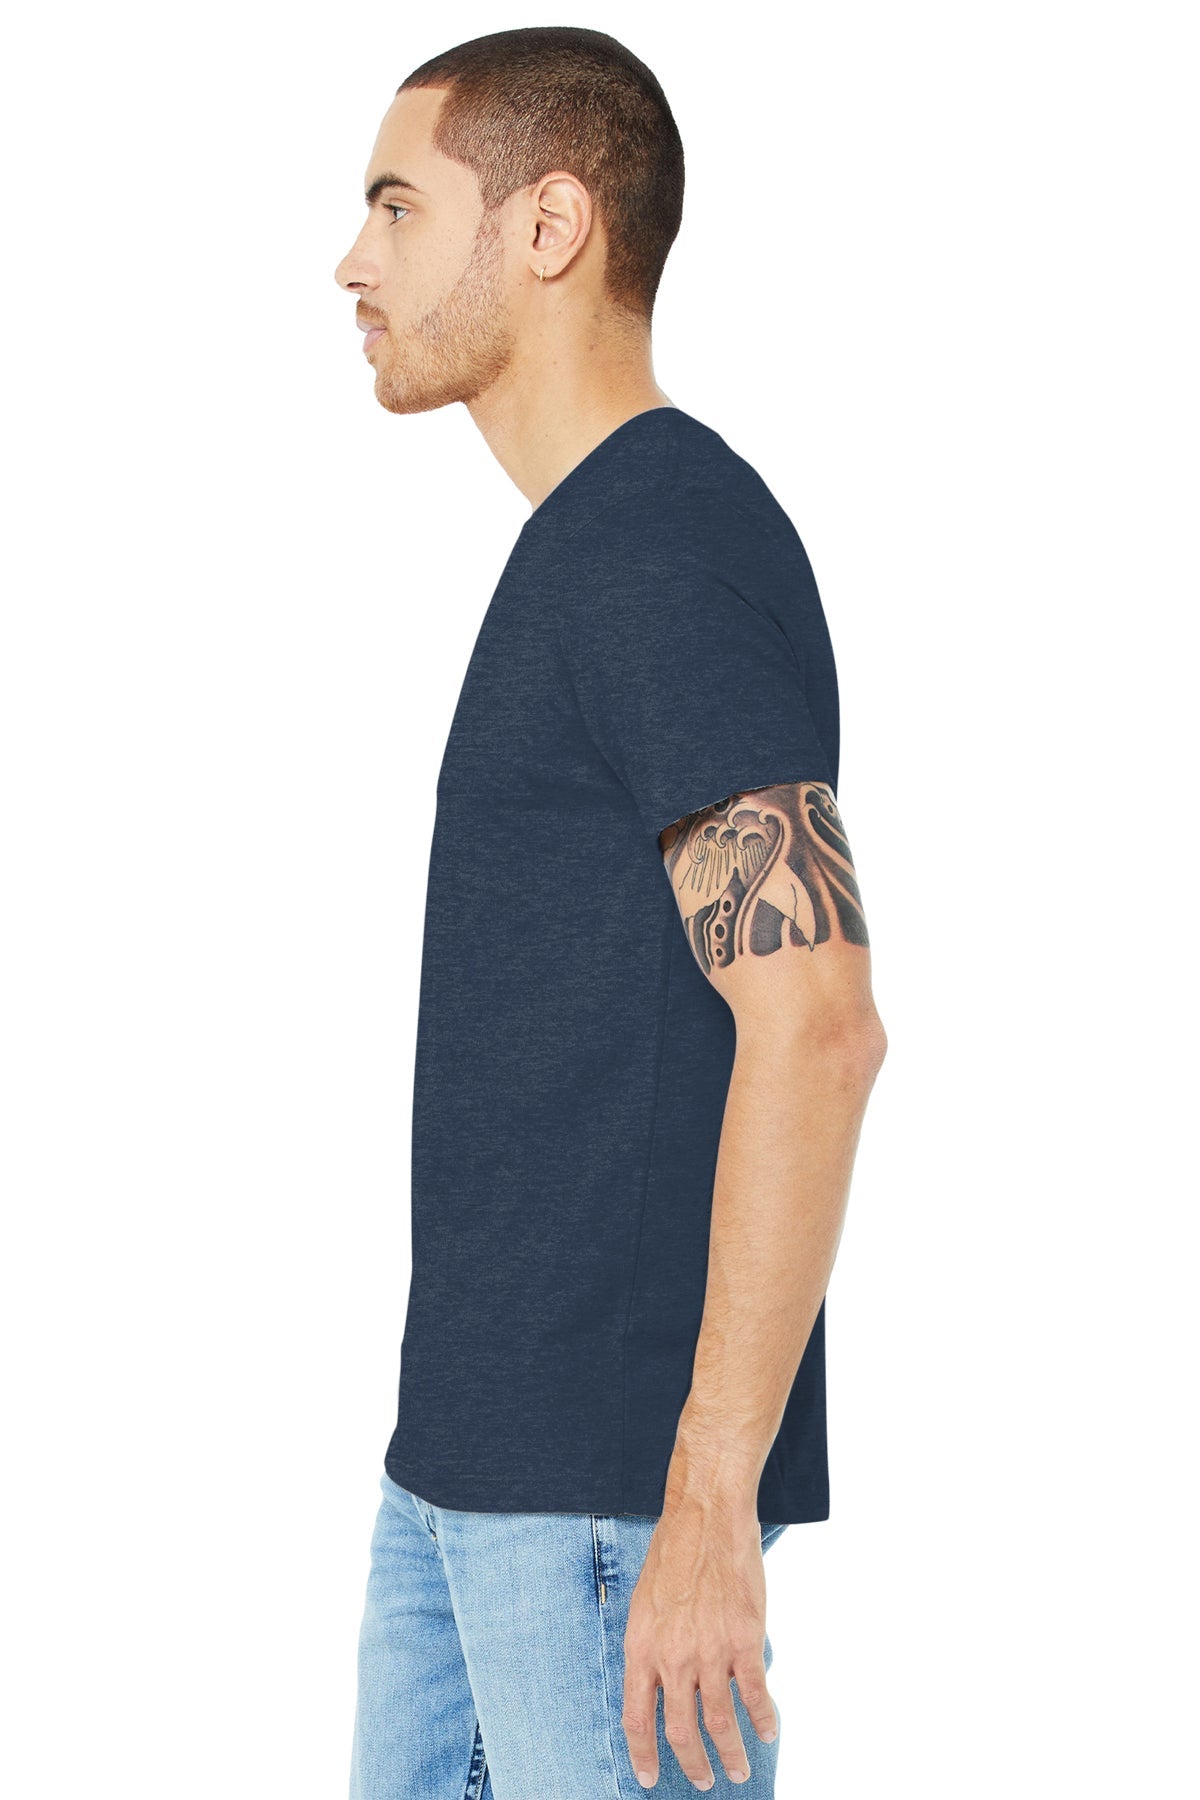 bella + canvas unisex jersey short sleeve t-shirt 3001c heather navy